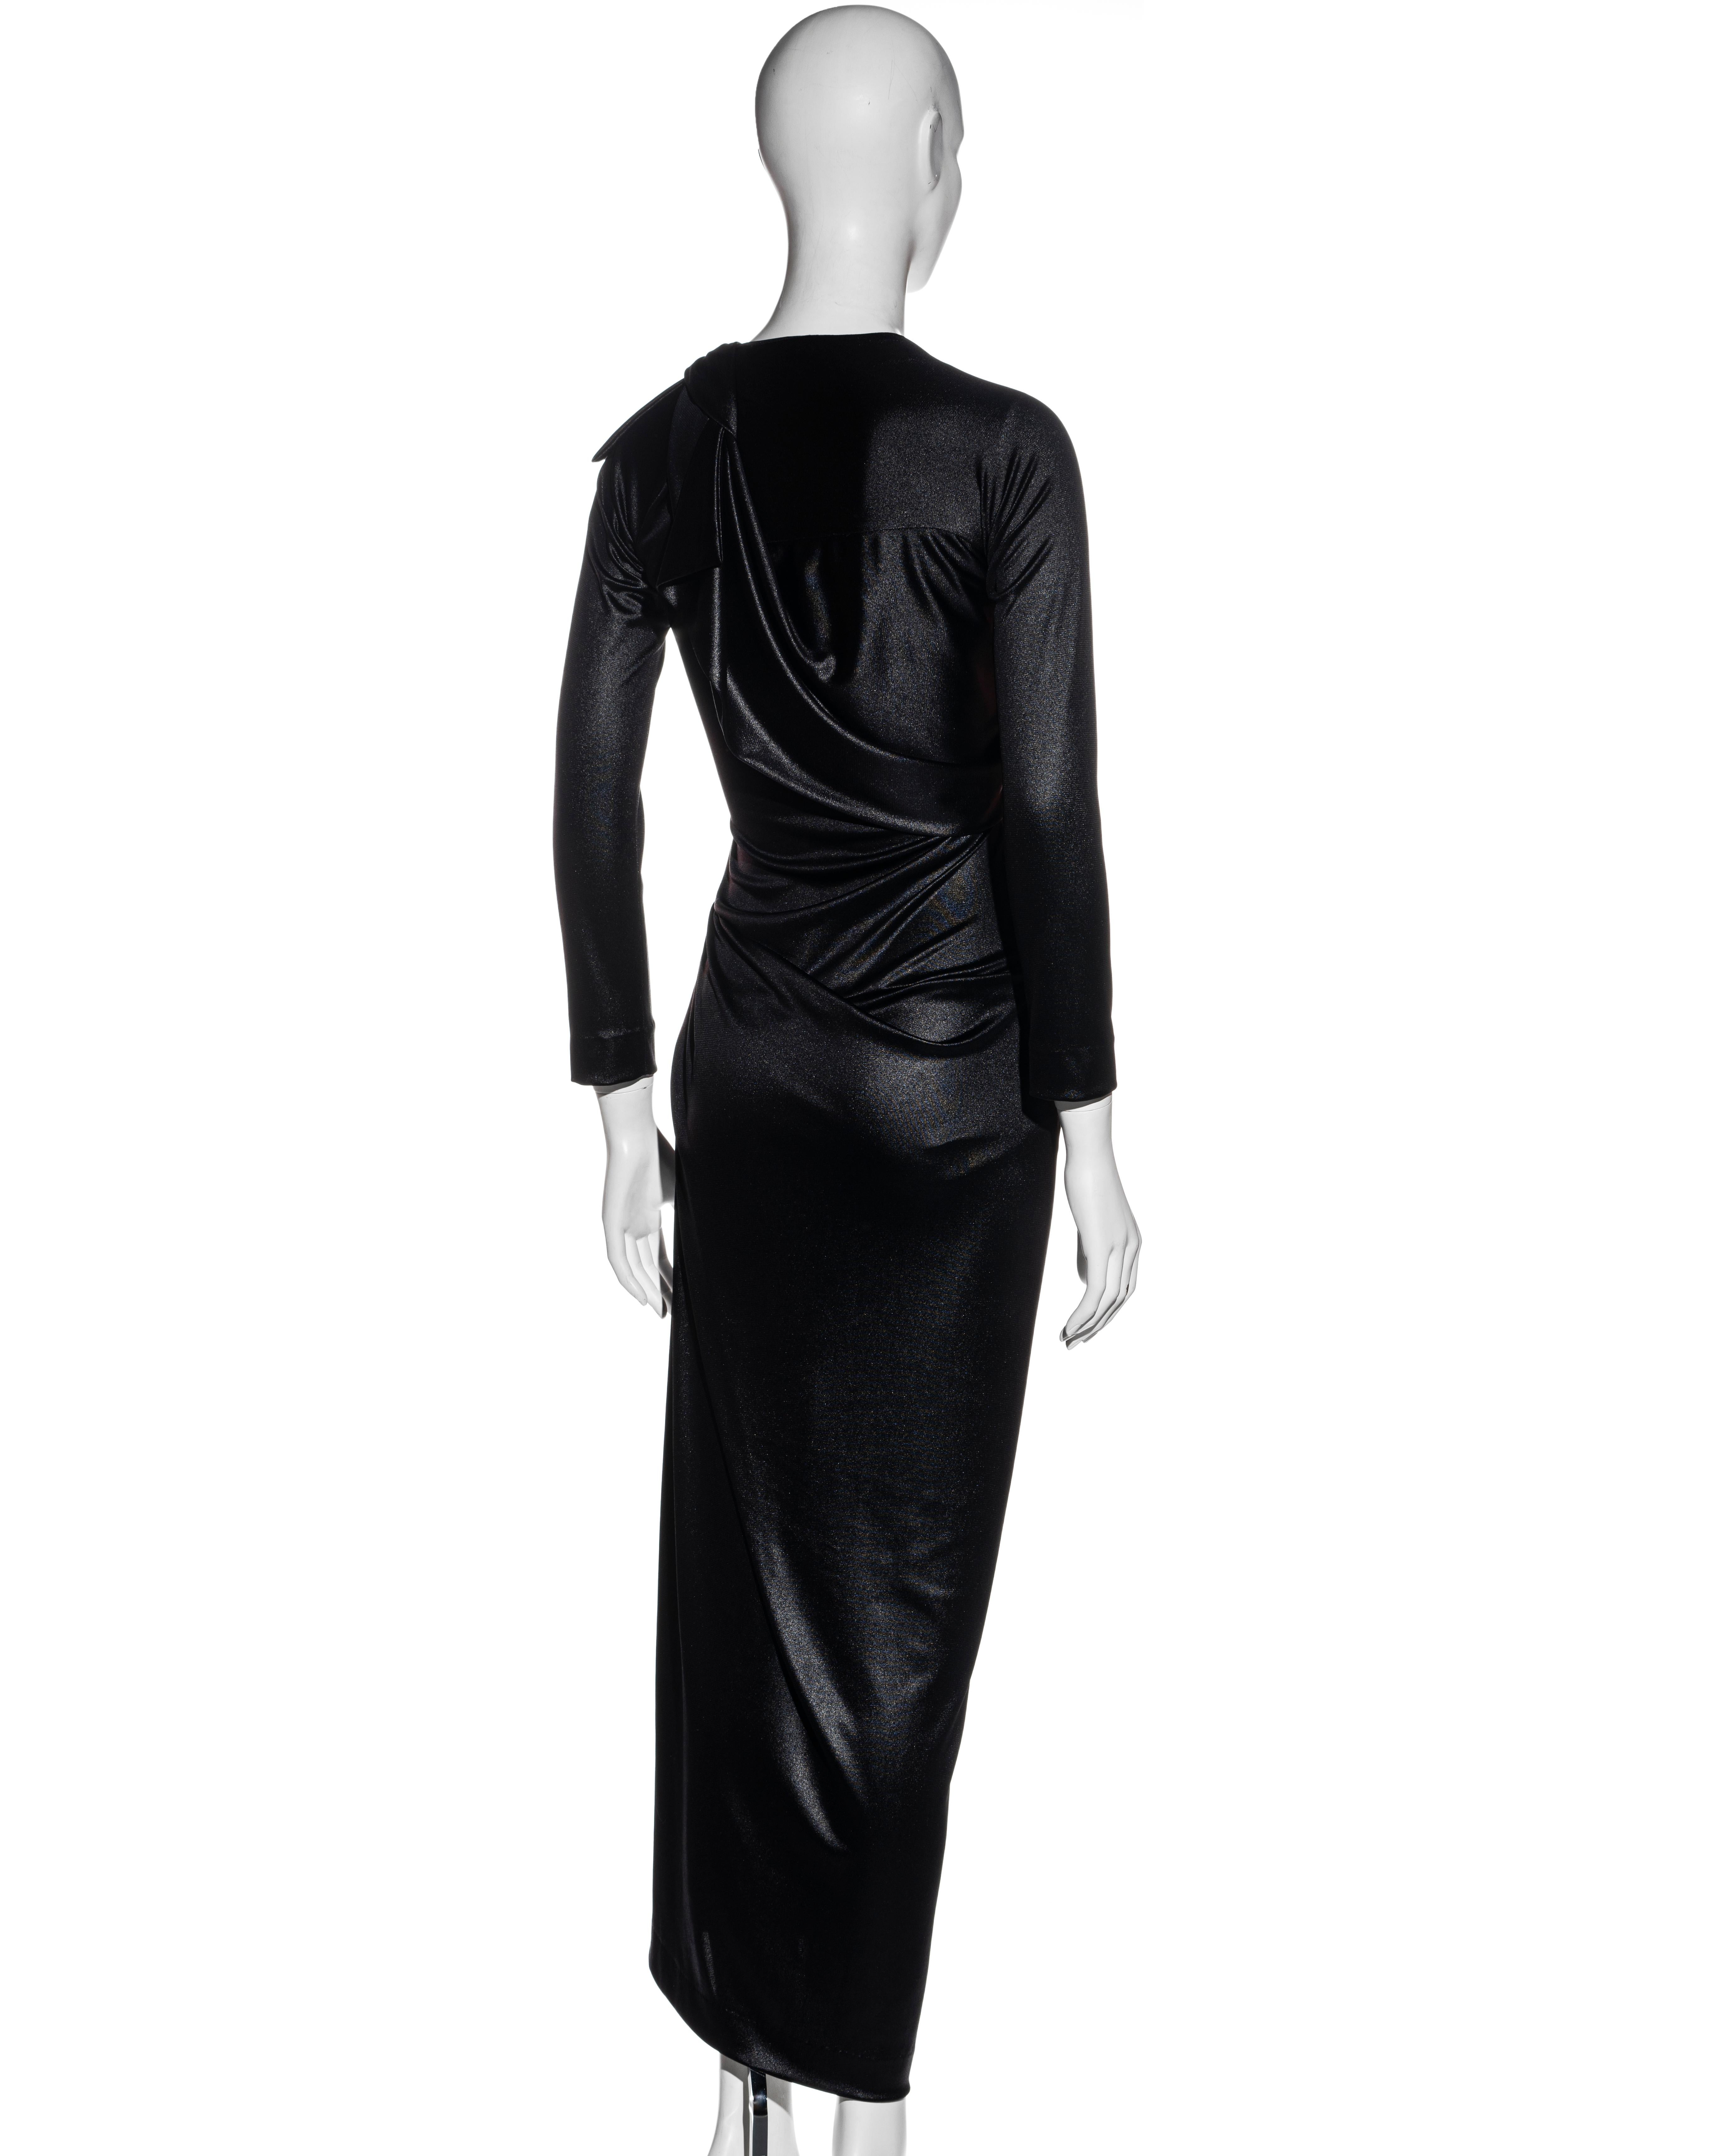 Vivienne Westwood metallic black nylon jersey draped evening dress, fw 1997 For Sale 1